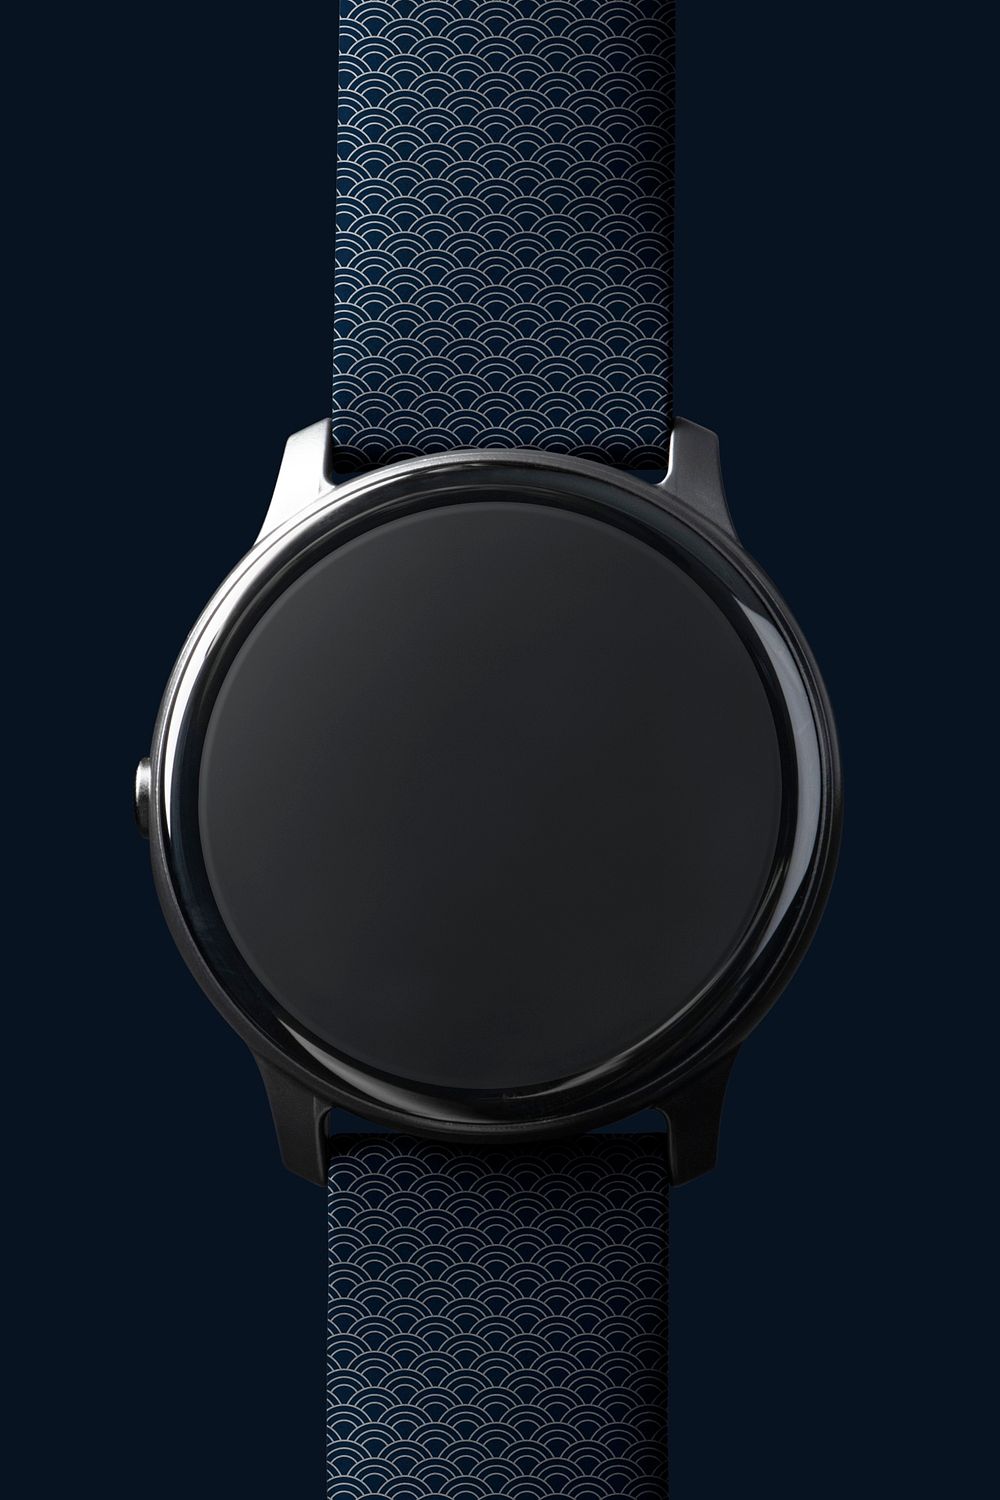 Smartwatch screen mockup psd digital | Premium PSD Mockup - rawpixel